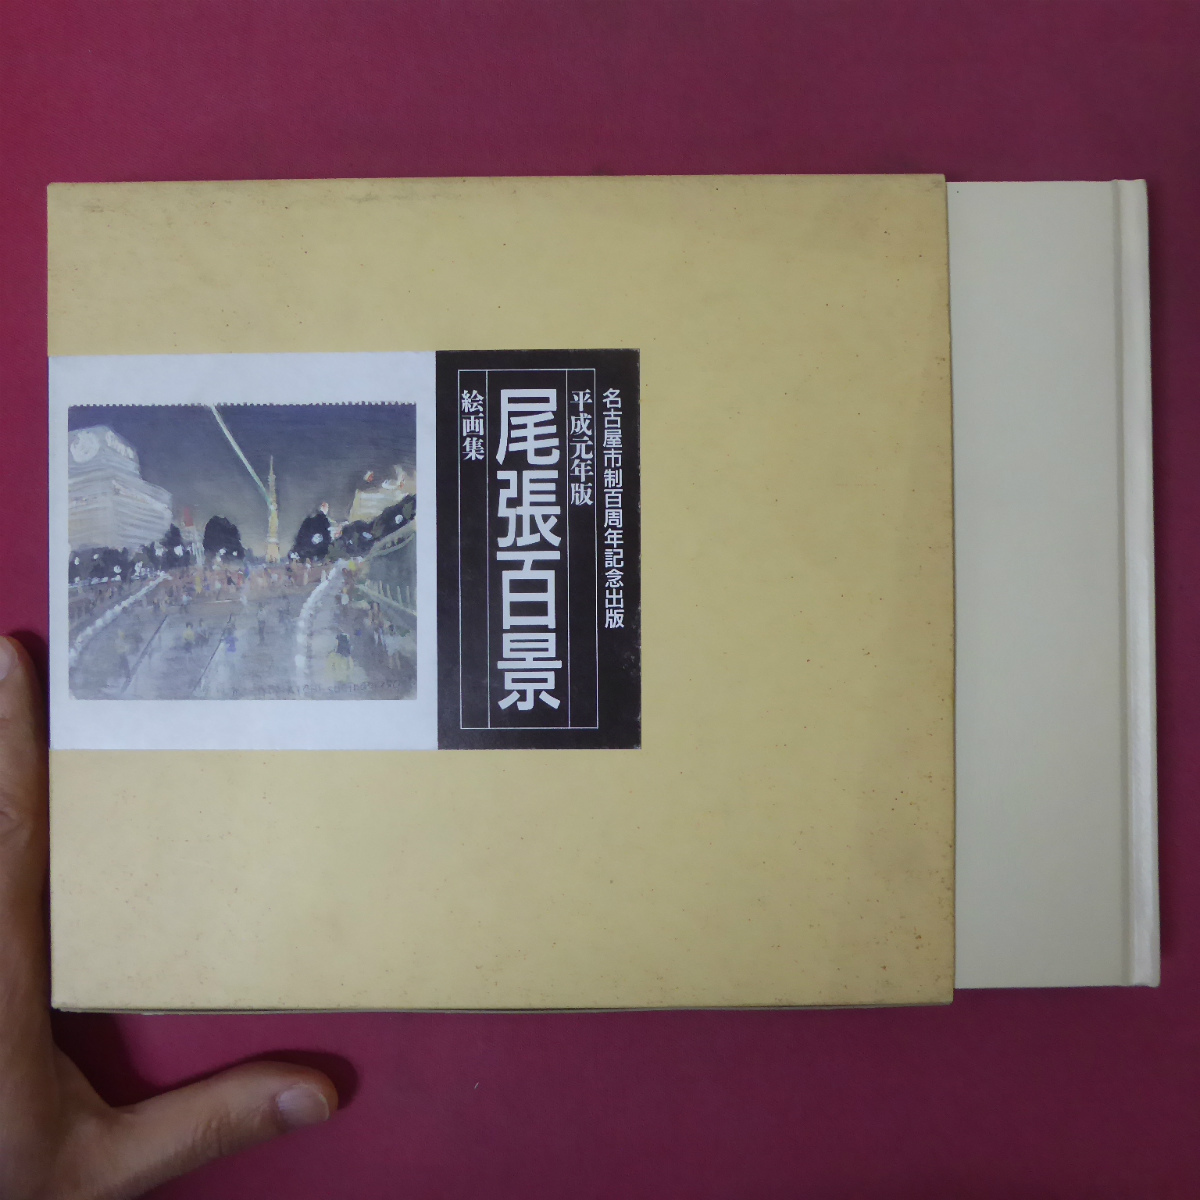 2 Catálogo [Edición de 1989 Colección de pinturas de 100 vistas de Owari/Exposición Mundial de Diseño de 1989 Sede del Castillo de Nagoya], Cuadro, Libro de arte, Recopilación, Catalogar